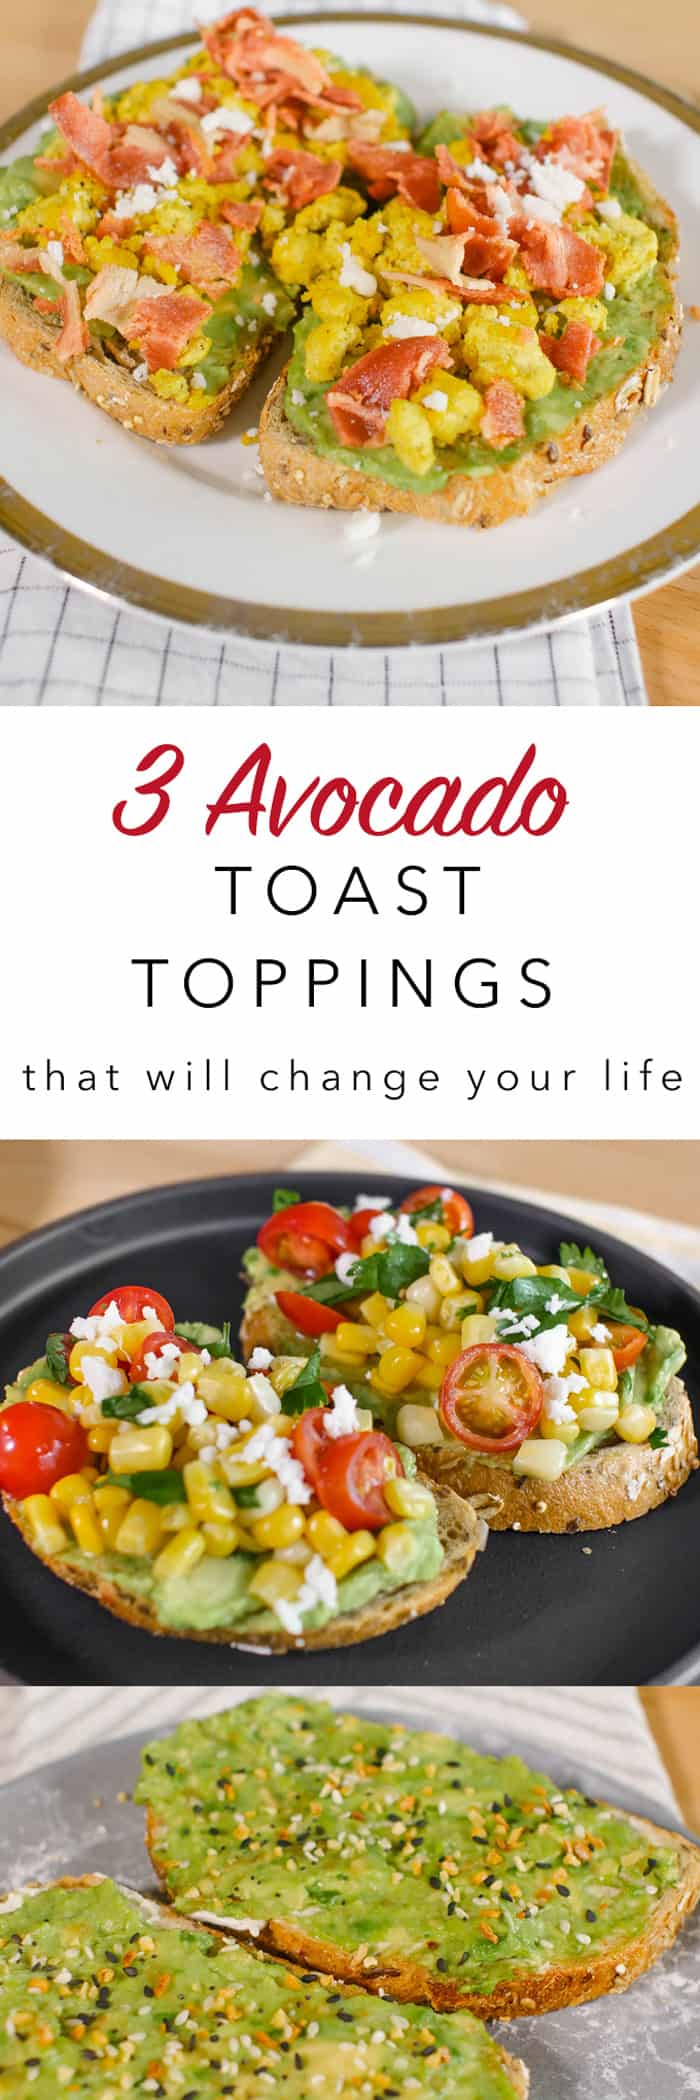 Avocado Toast Toppings Recipe Pinterest